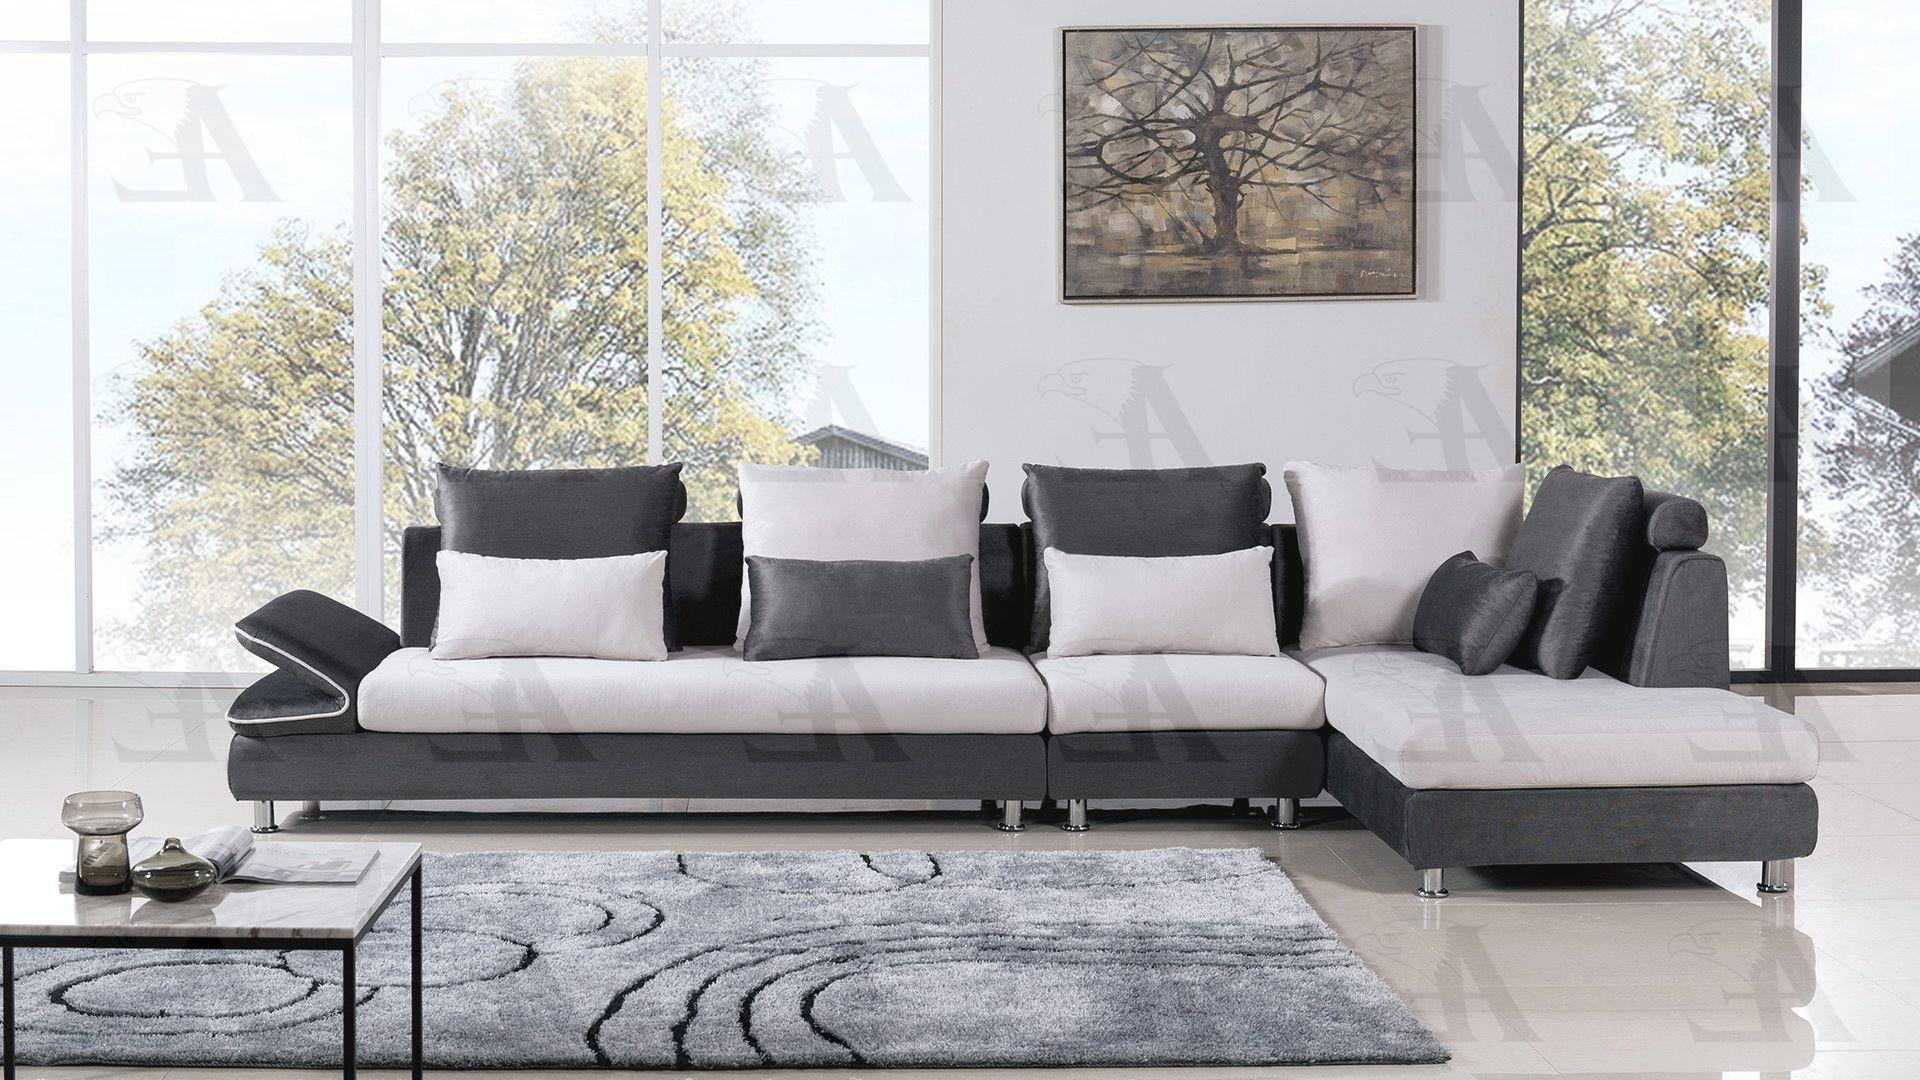 

    
American Eagle Furniture AE-L341 Sectional Sofa Cream/Gray AE-L341L
